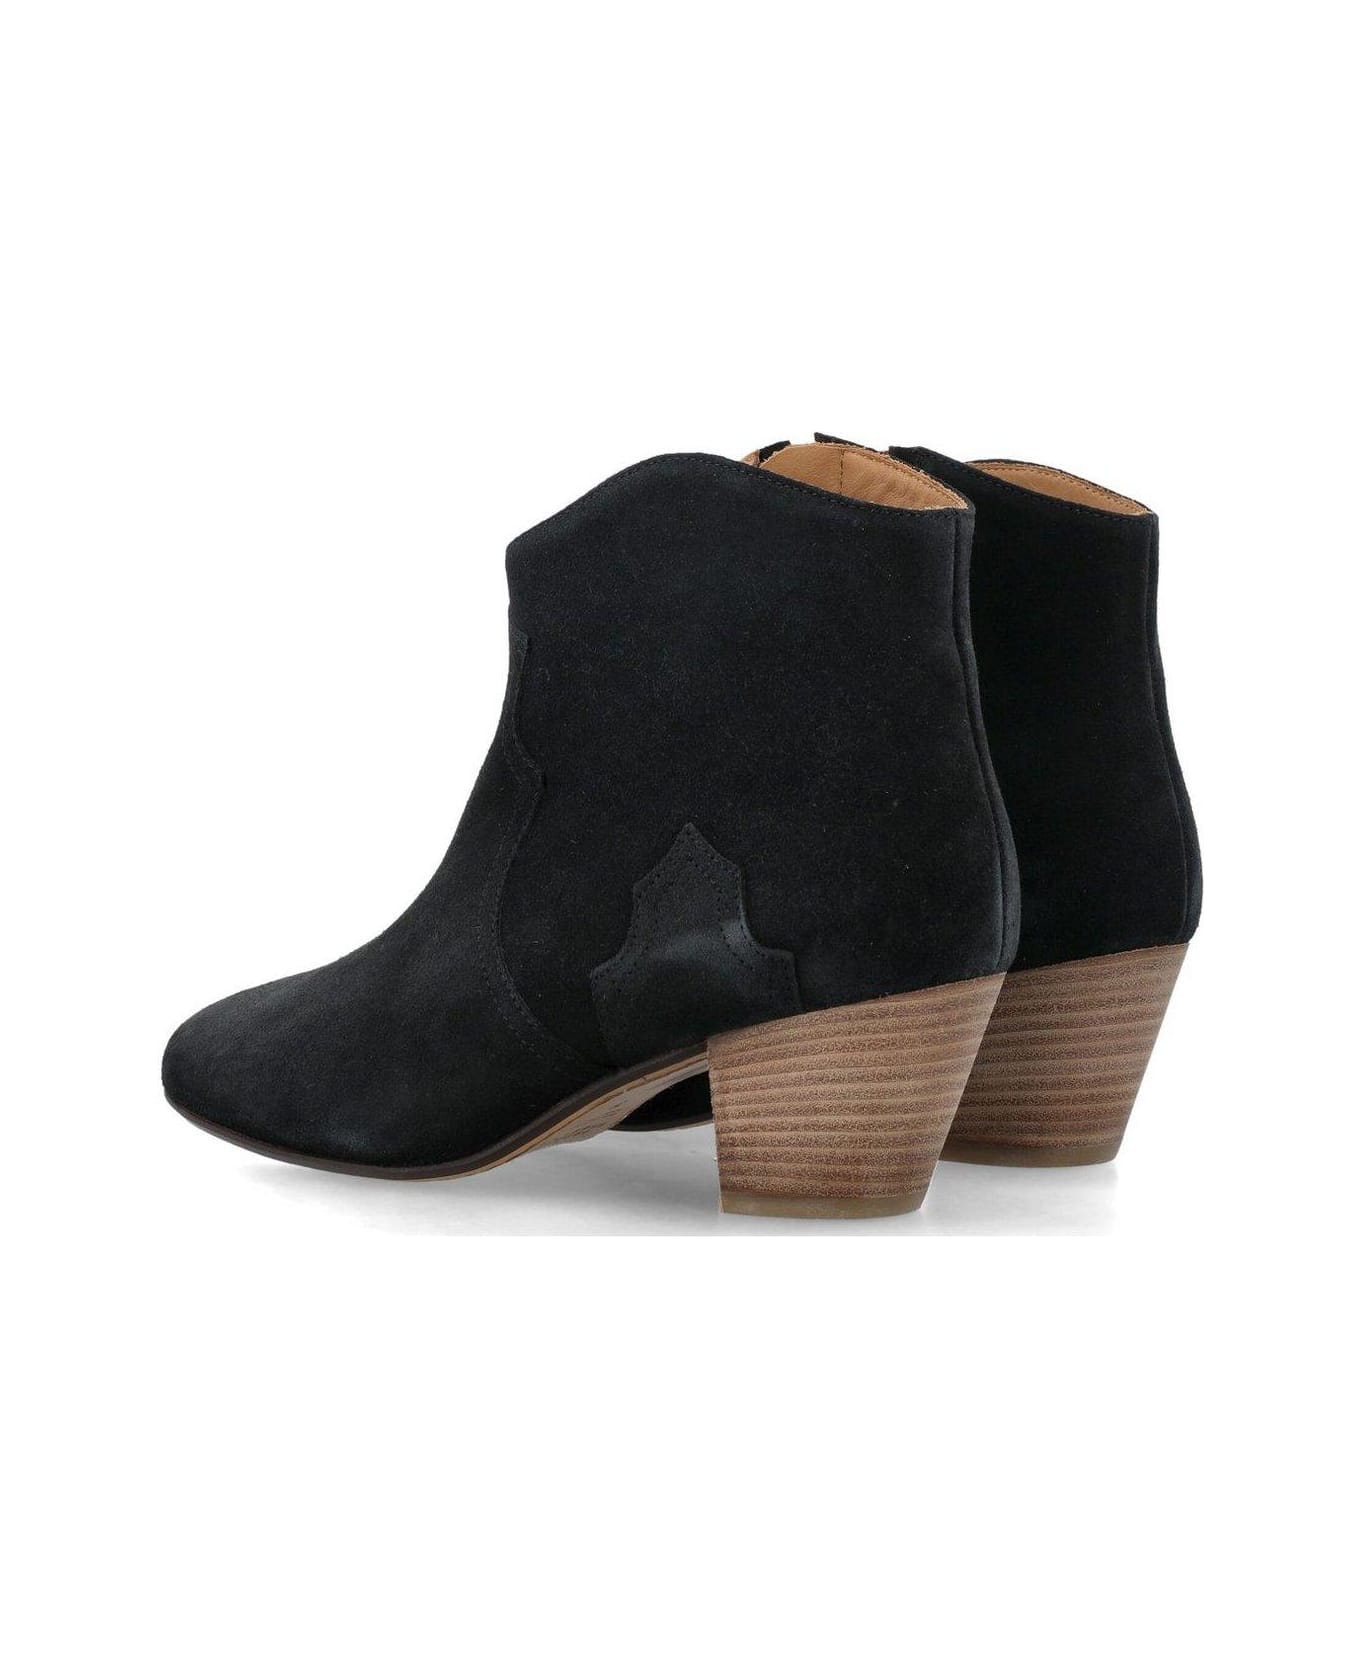 Isabel Marant Block Heel Ankle Boots - Black